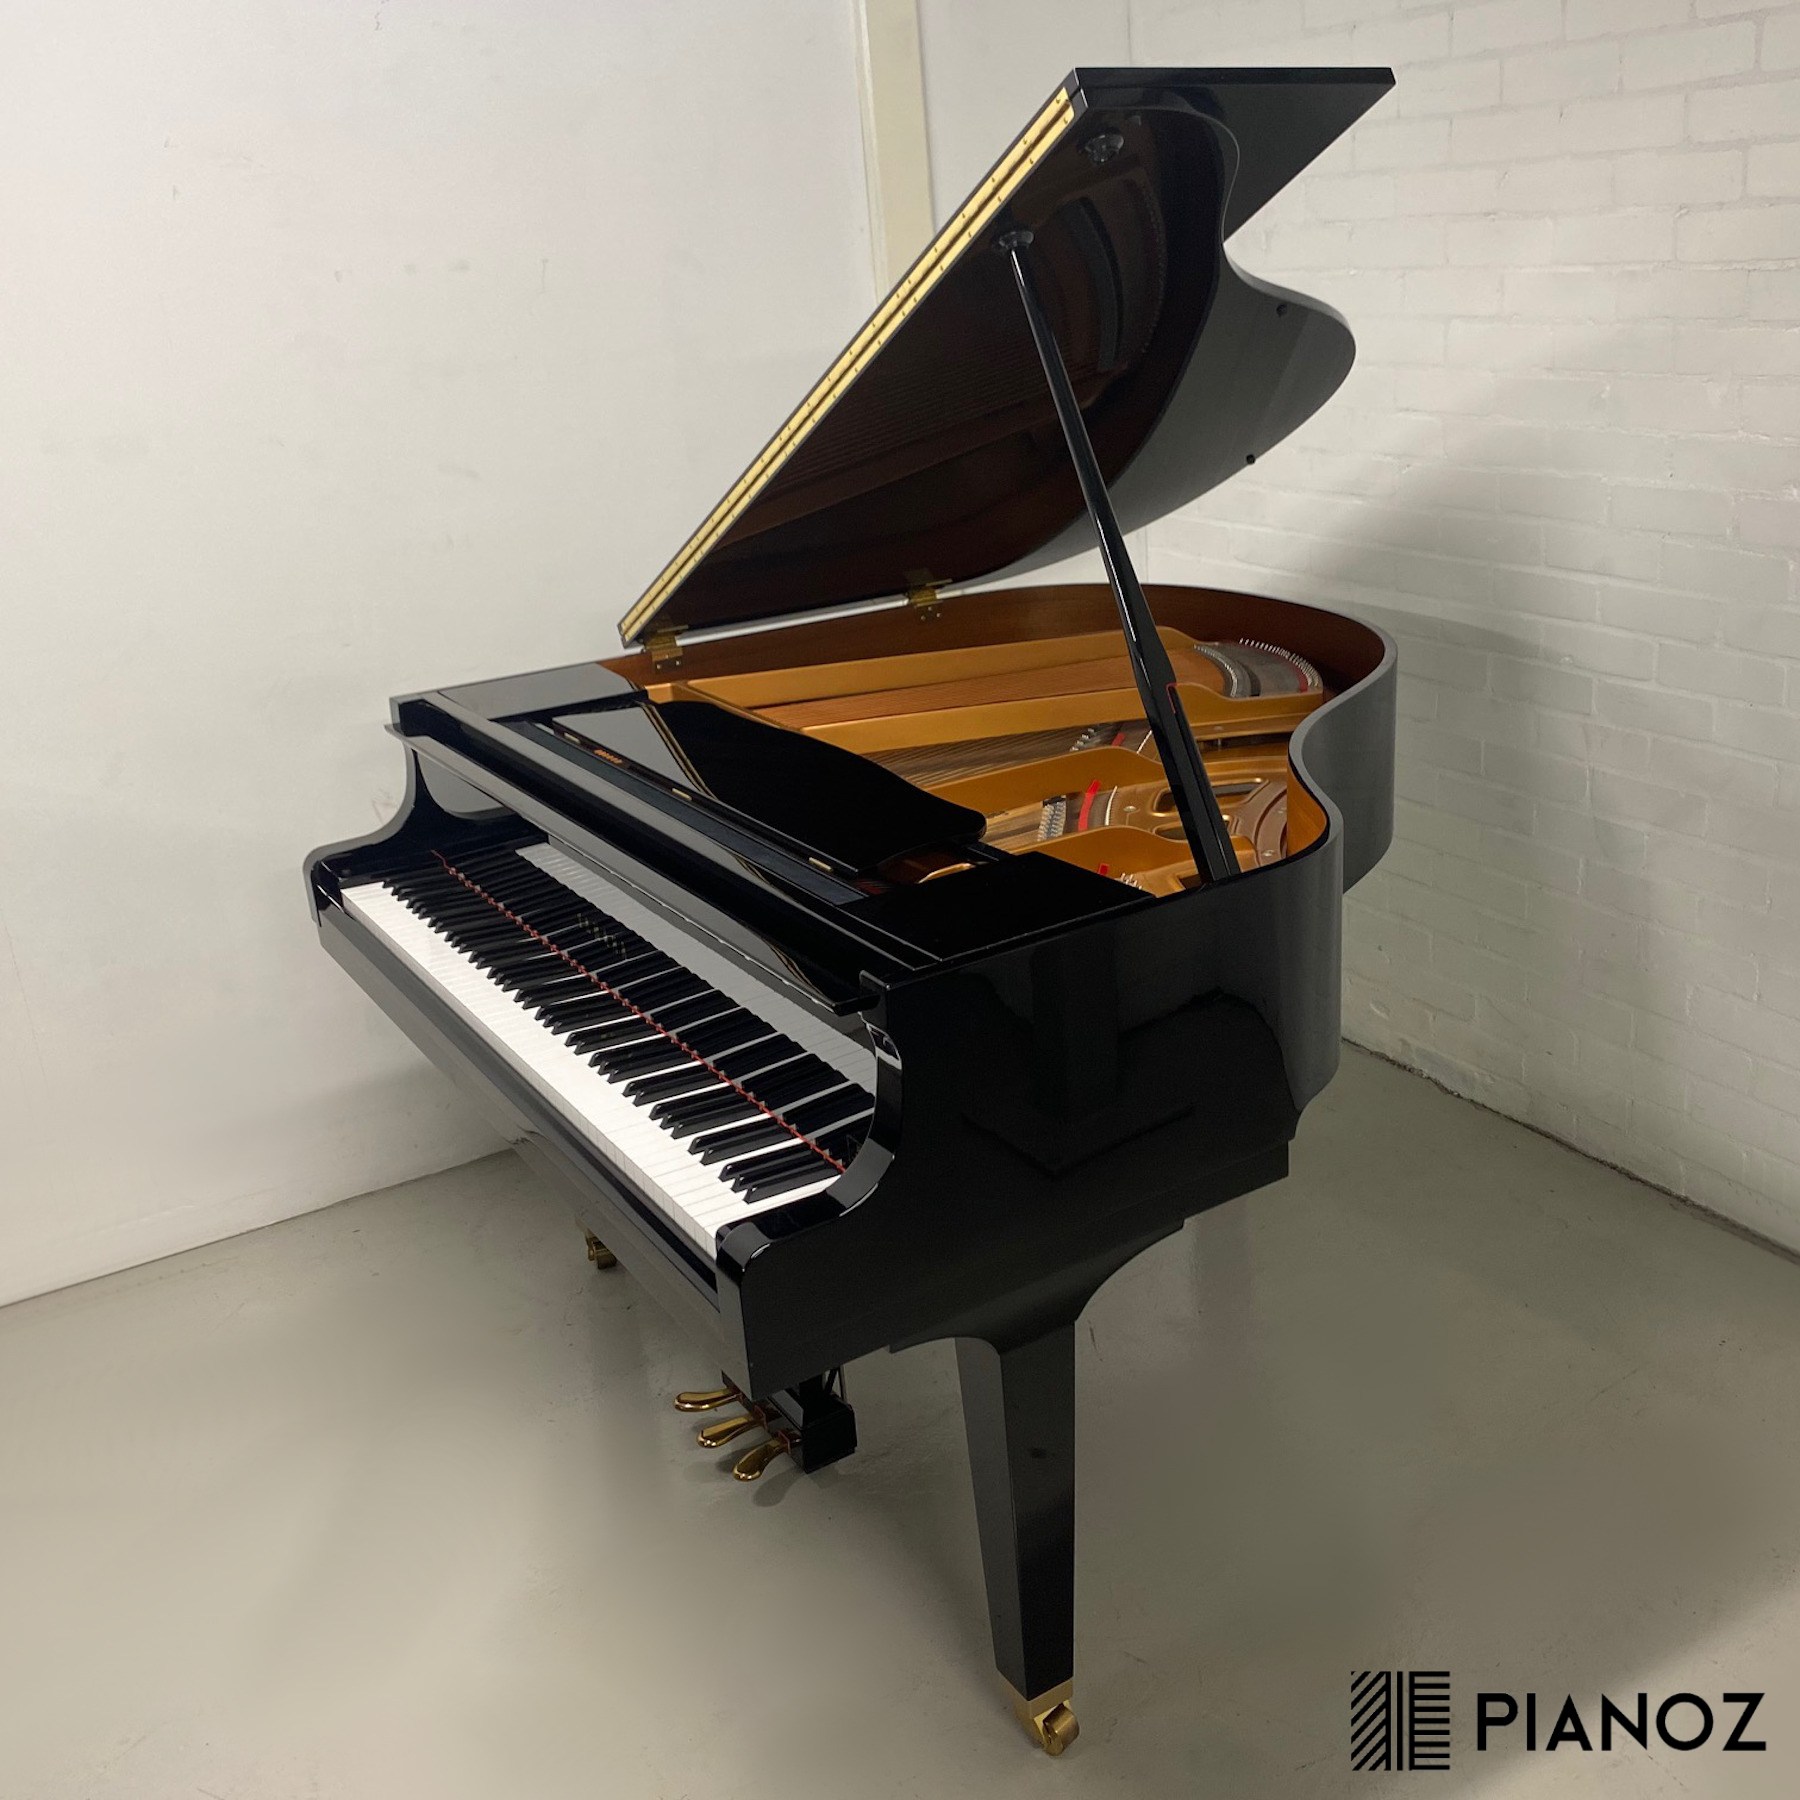 Yamaha GA1 Japanese Baby Grand Piano piano for sale in UK